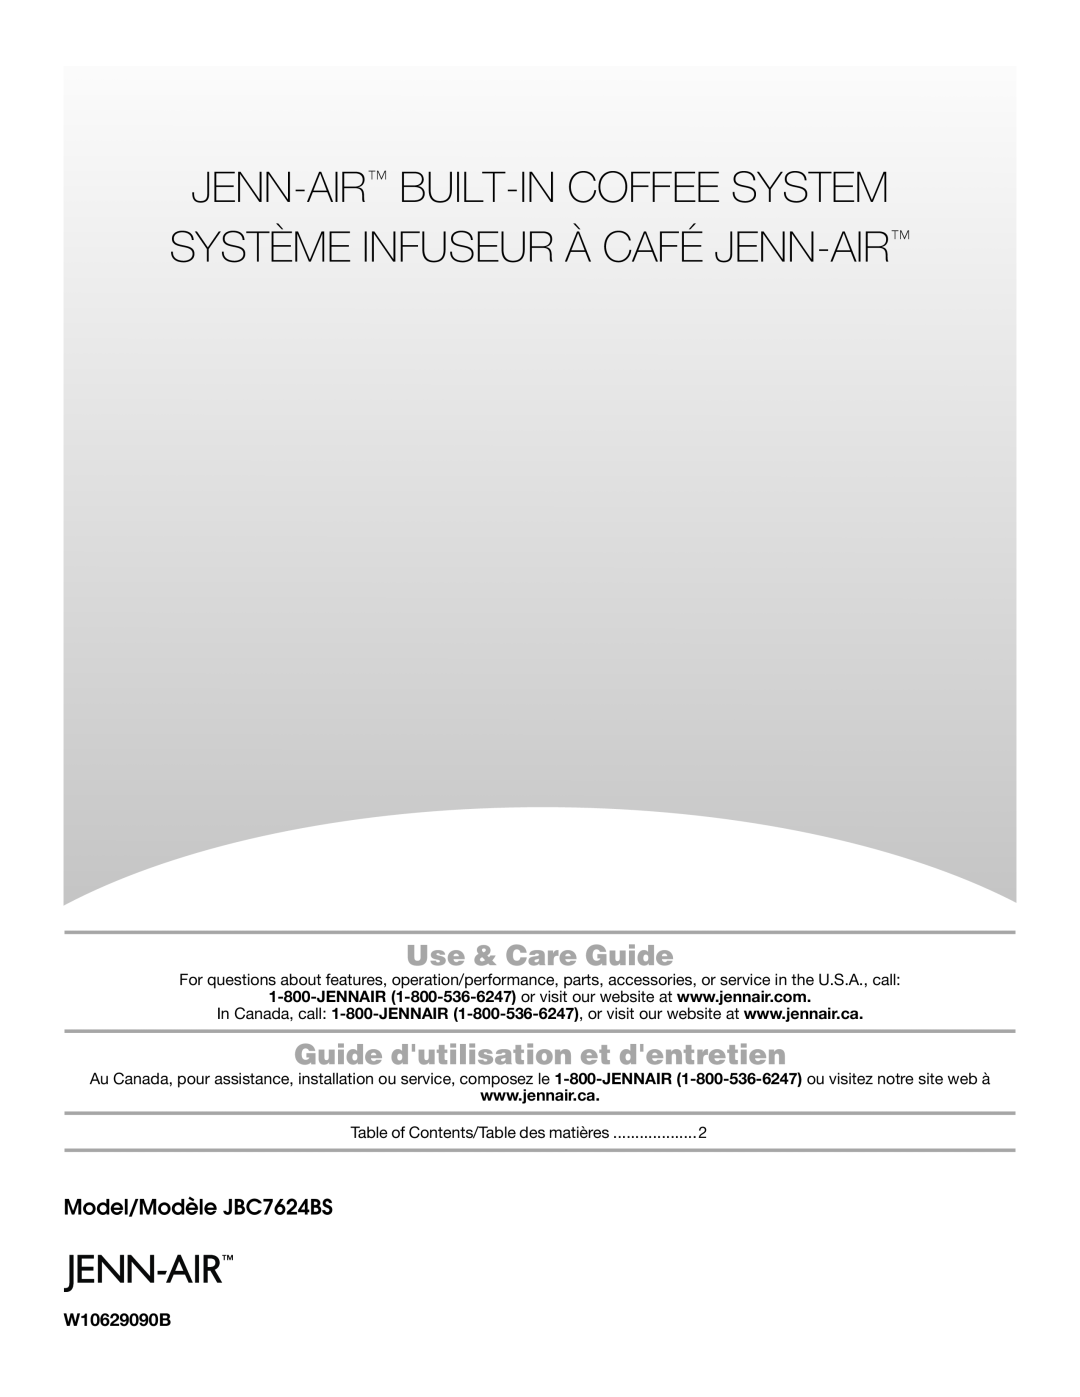 Jenn-Air JBC7624BS manual W10629090B, Jenn-Air Built-In Coffee System Système Infuseur À Café Jenn-Air, Use & Care Guide 